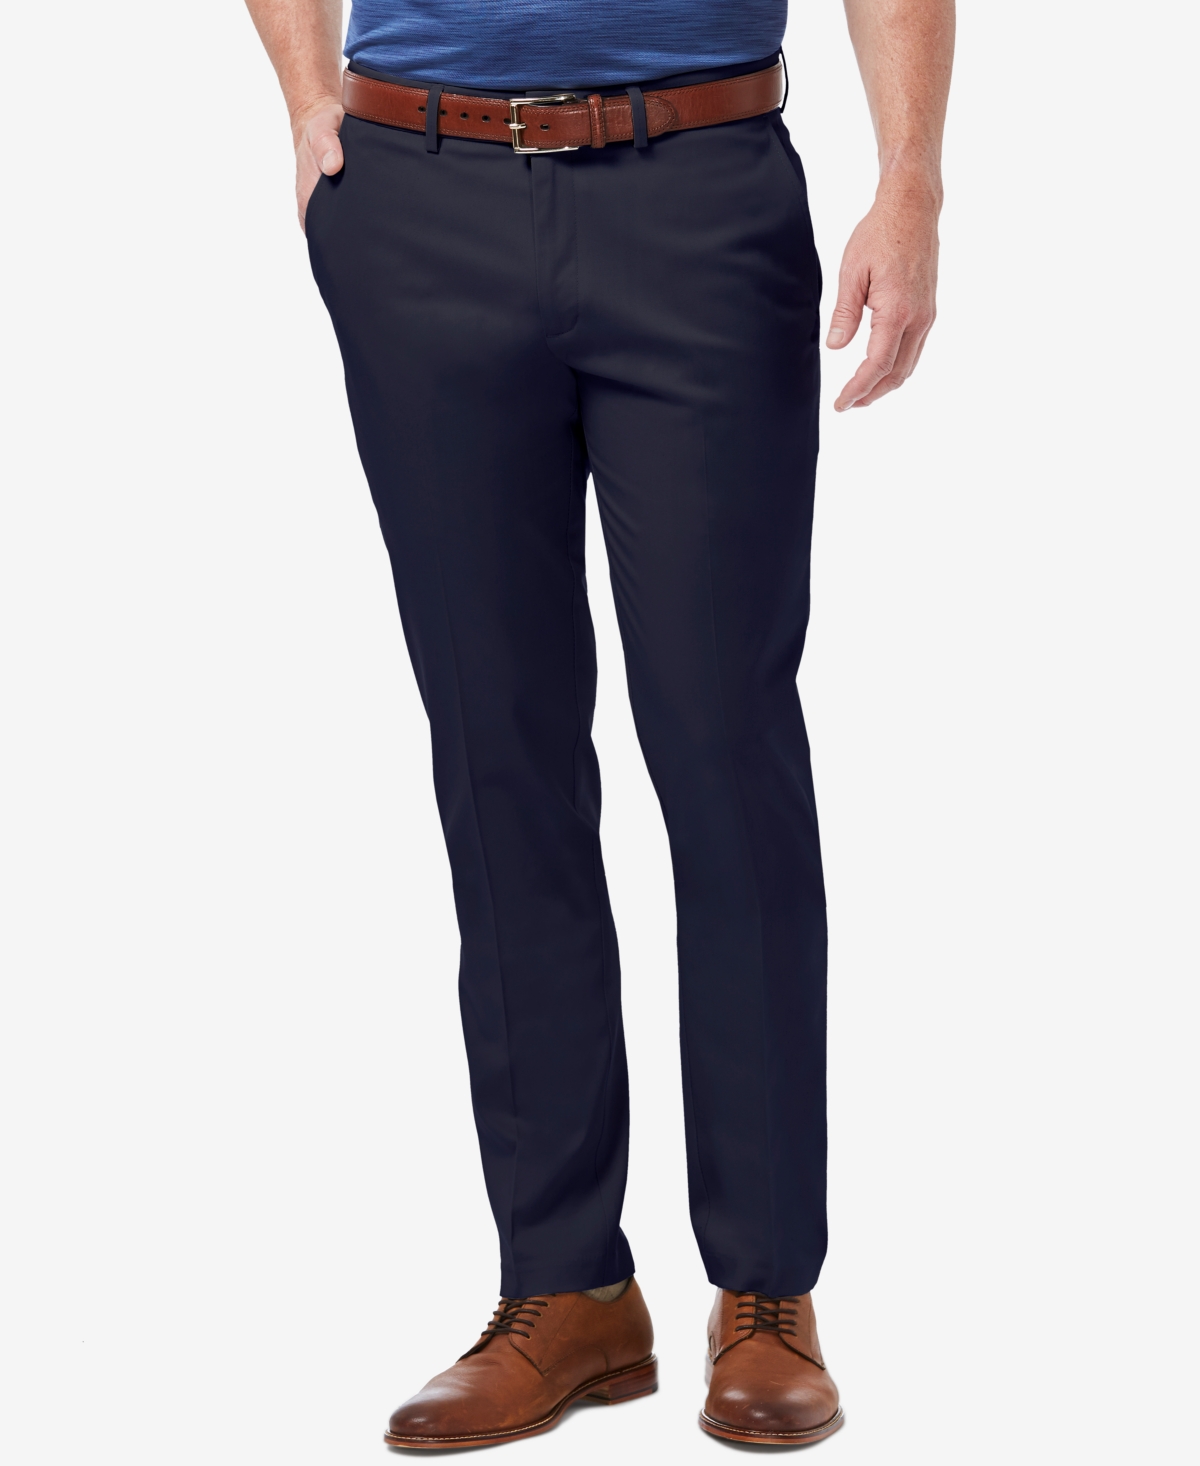 Men's Premium No Iron Khaki Slim-Fit Flat Front Pants - Black